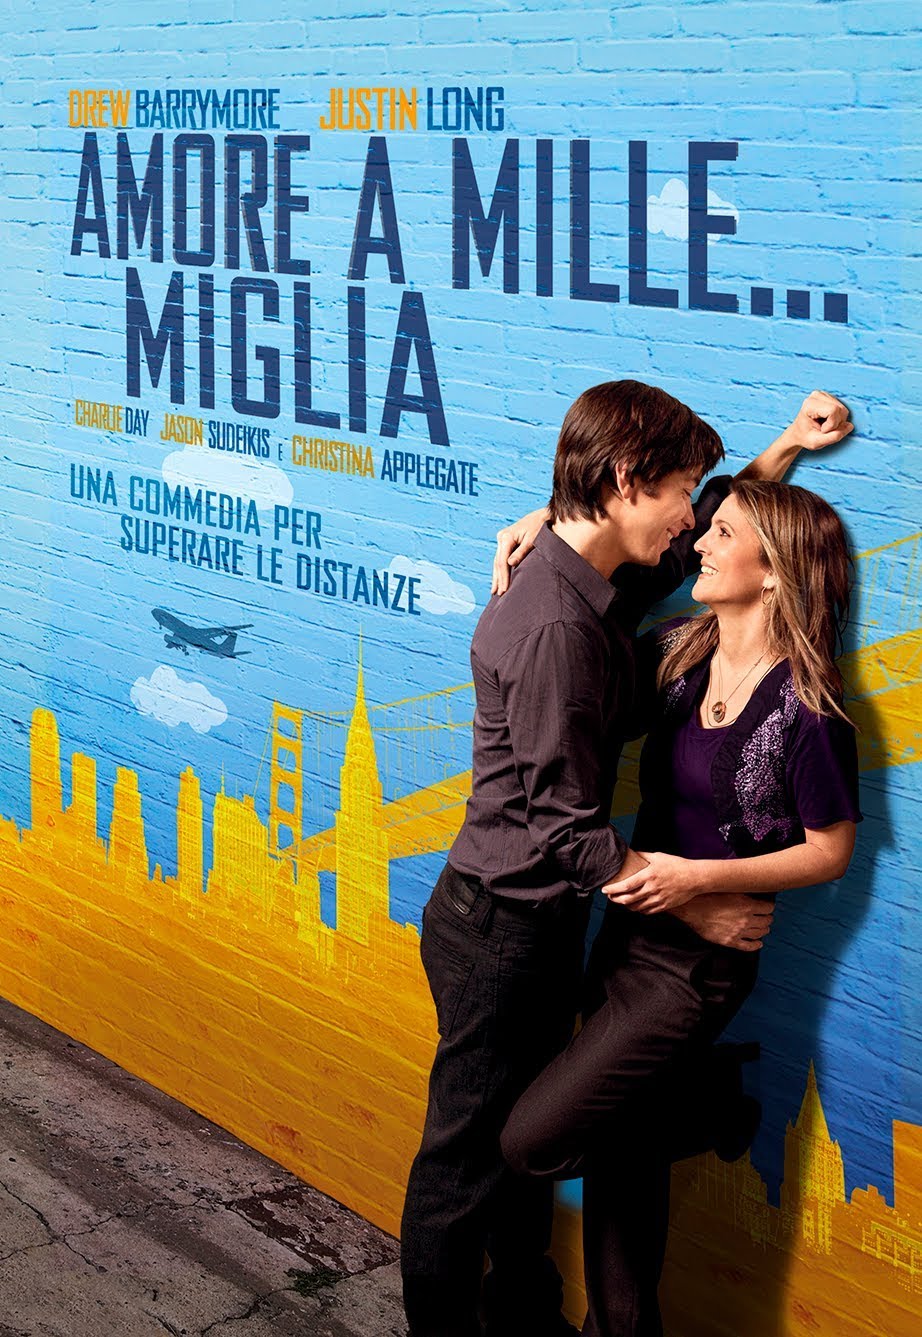 Amore a mille miglia [HD] (2010)